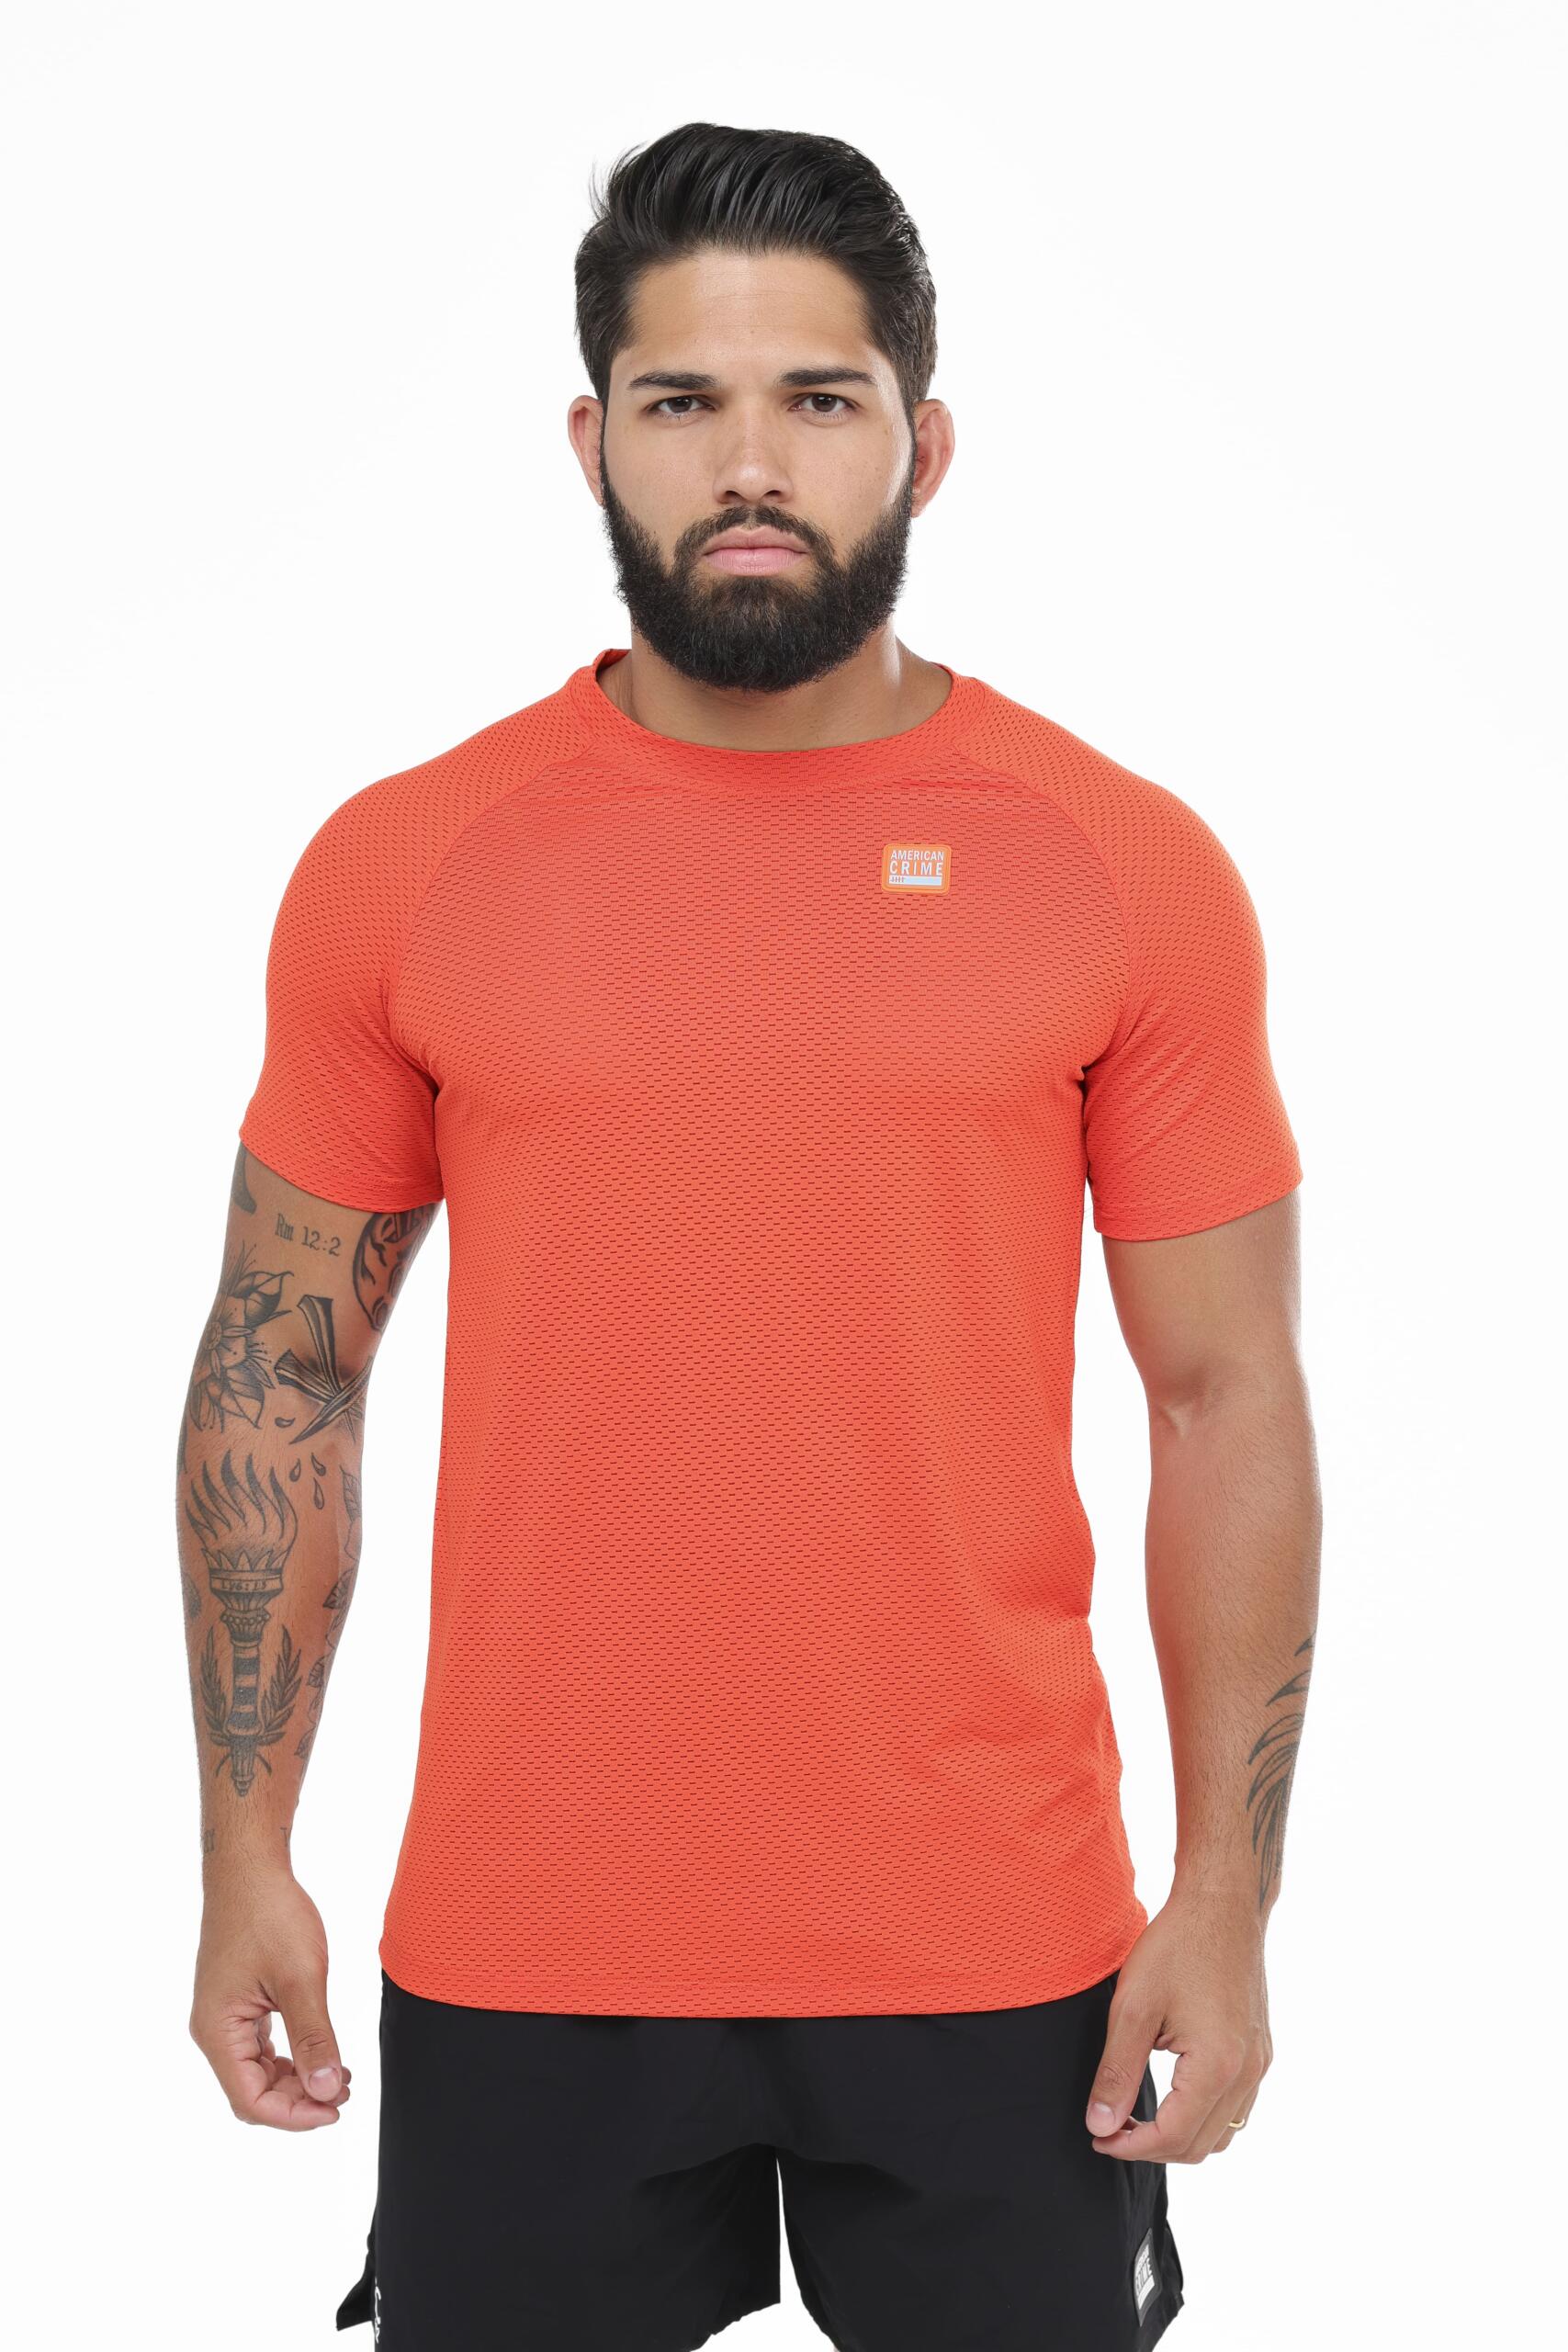 Camiseta Training Air Shoulder Tangerine-min